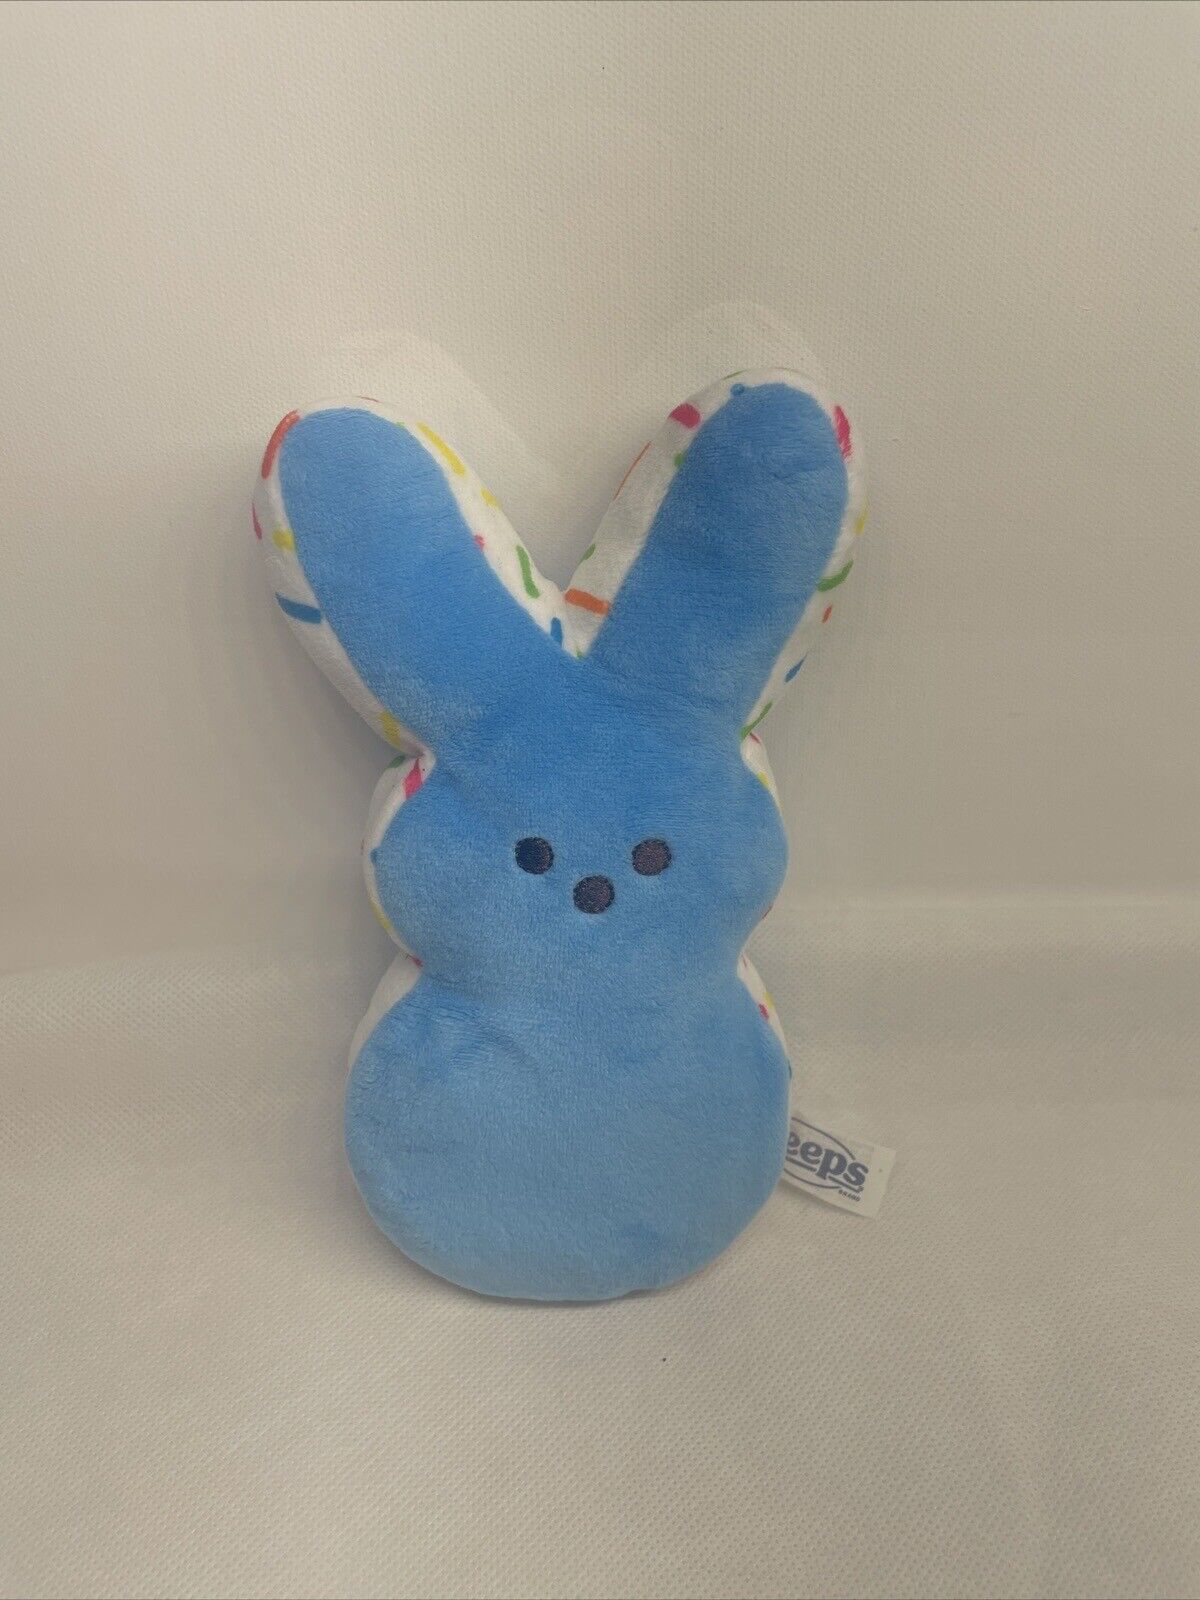 Ruz PEEPS 9” Easter Bunny Plush 2021 Blue with multi-colored sprinkles